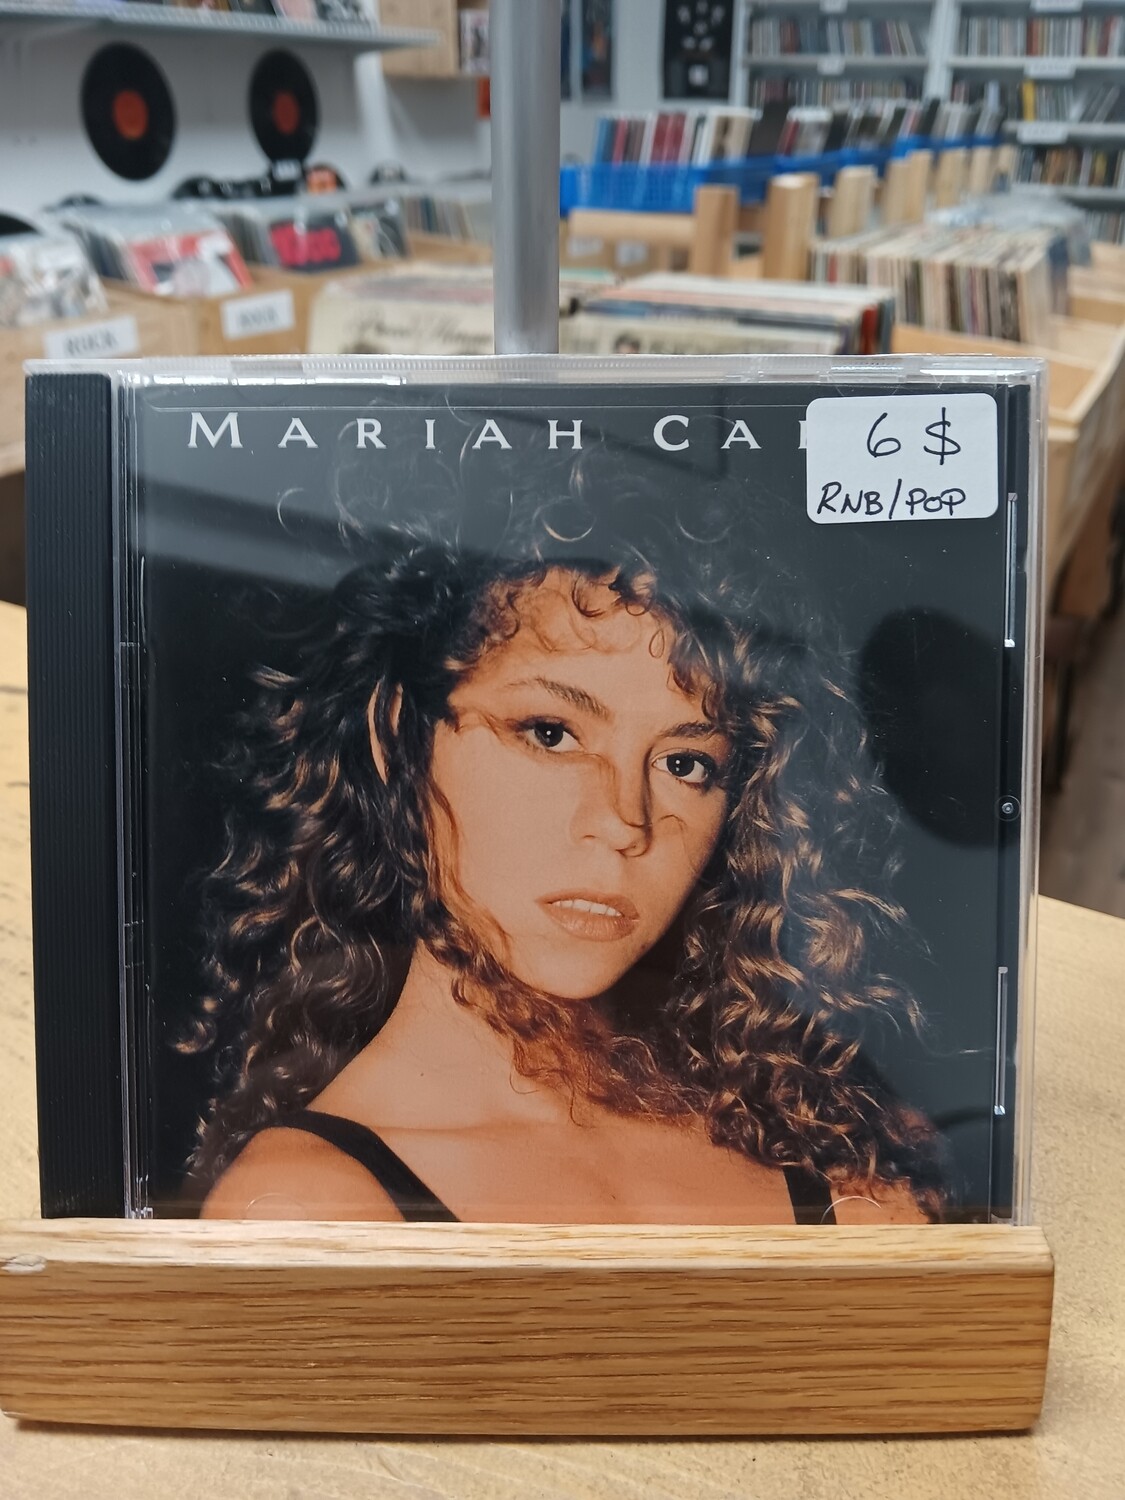 MARIAH CAREY - Mariah Carey (CD)